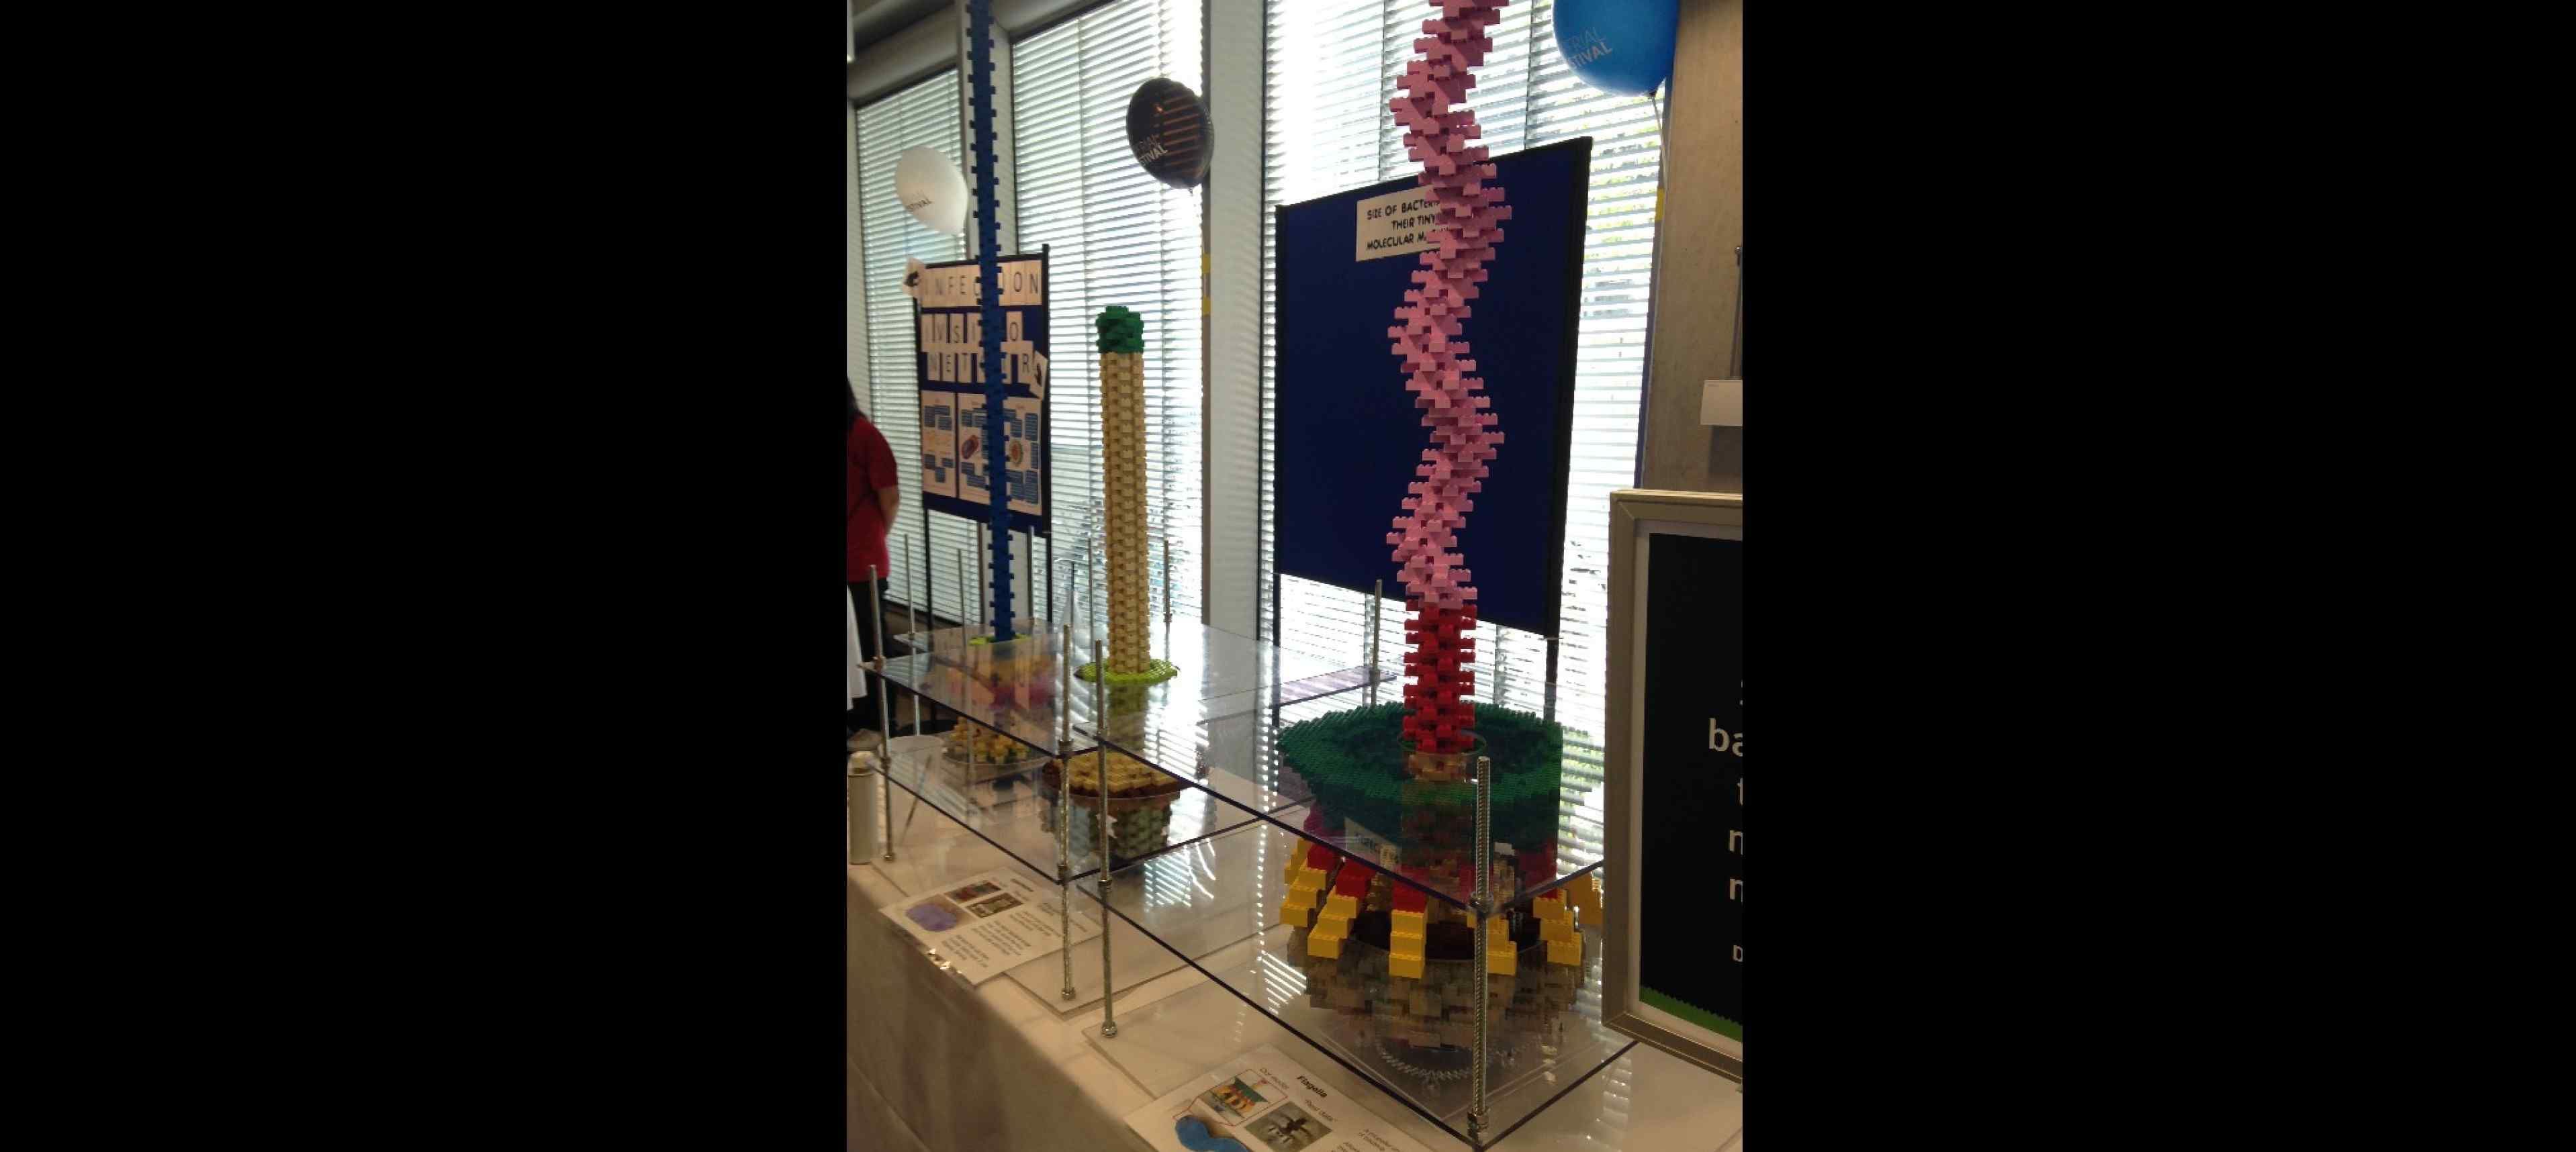 Lego models of bacterial molecular machines